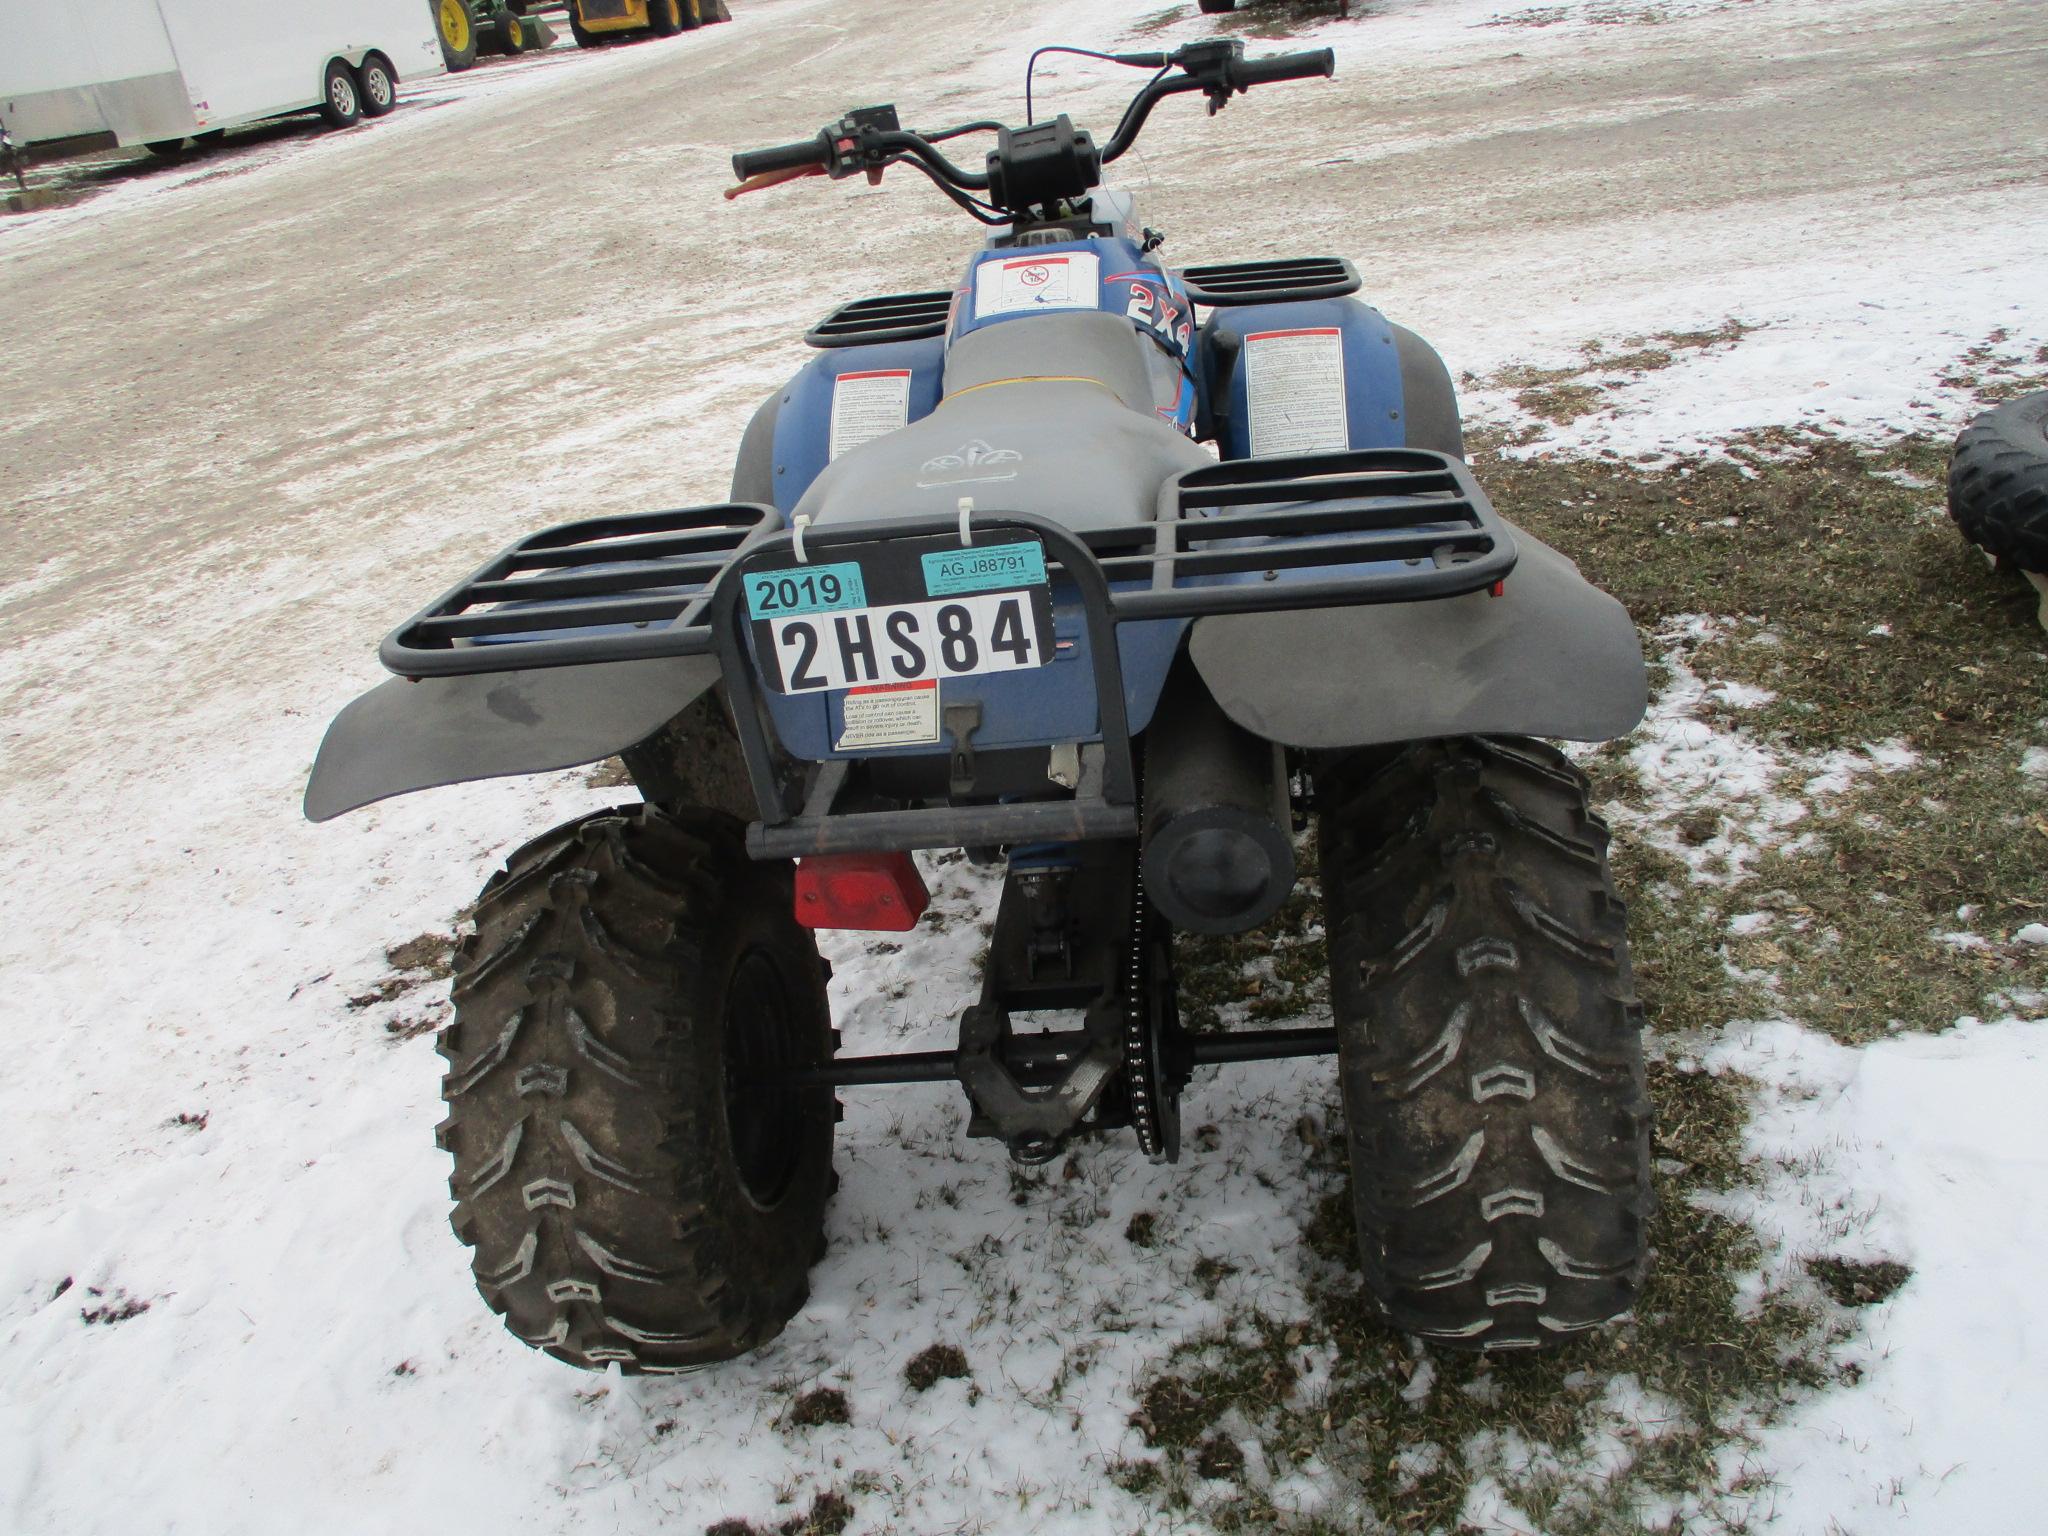 Polaris 300, 2x4 ATV